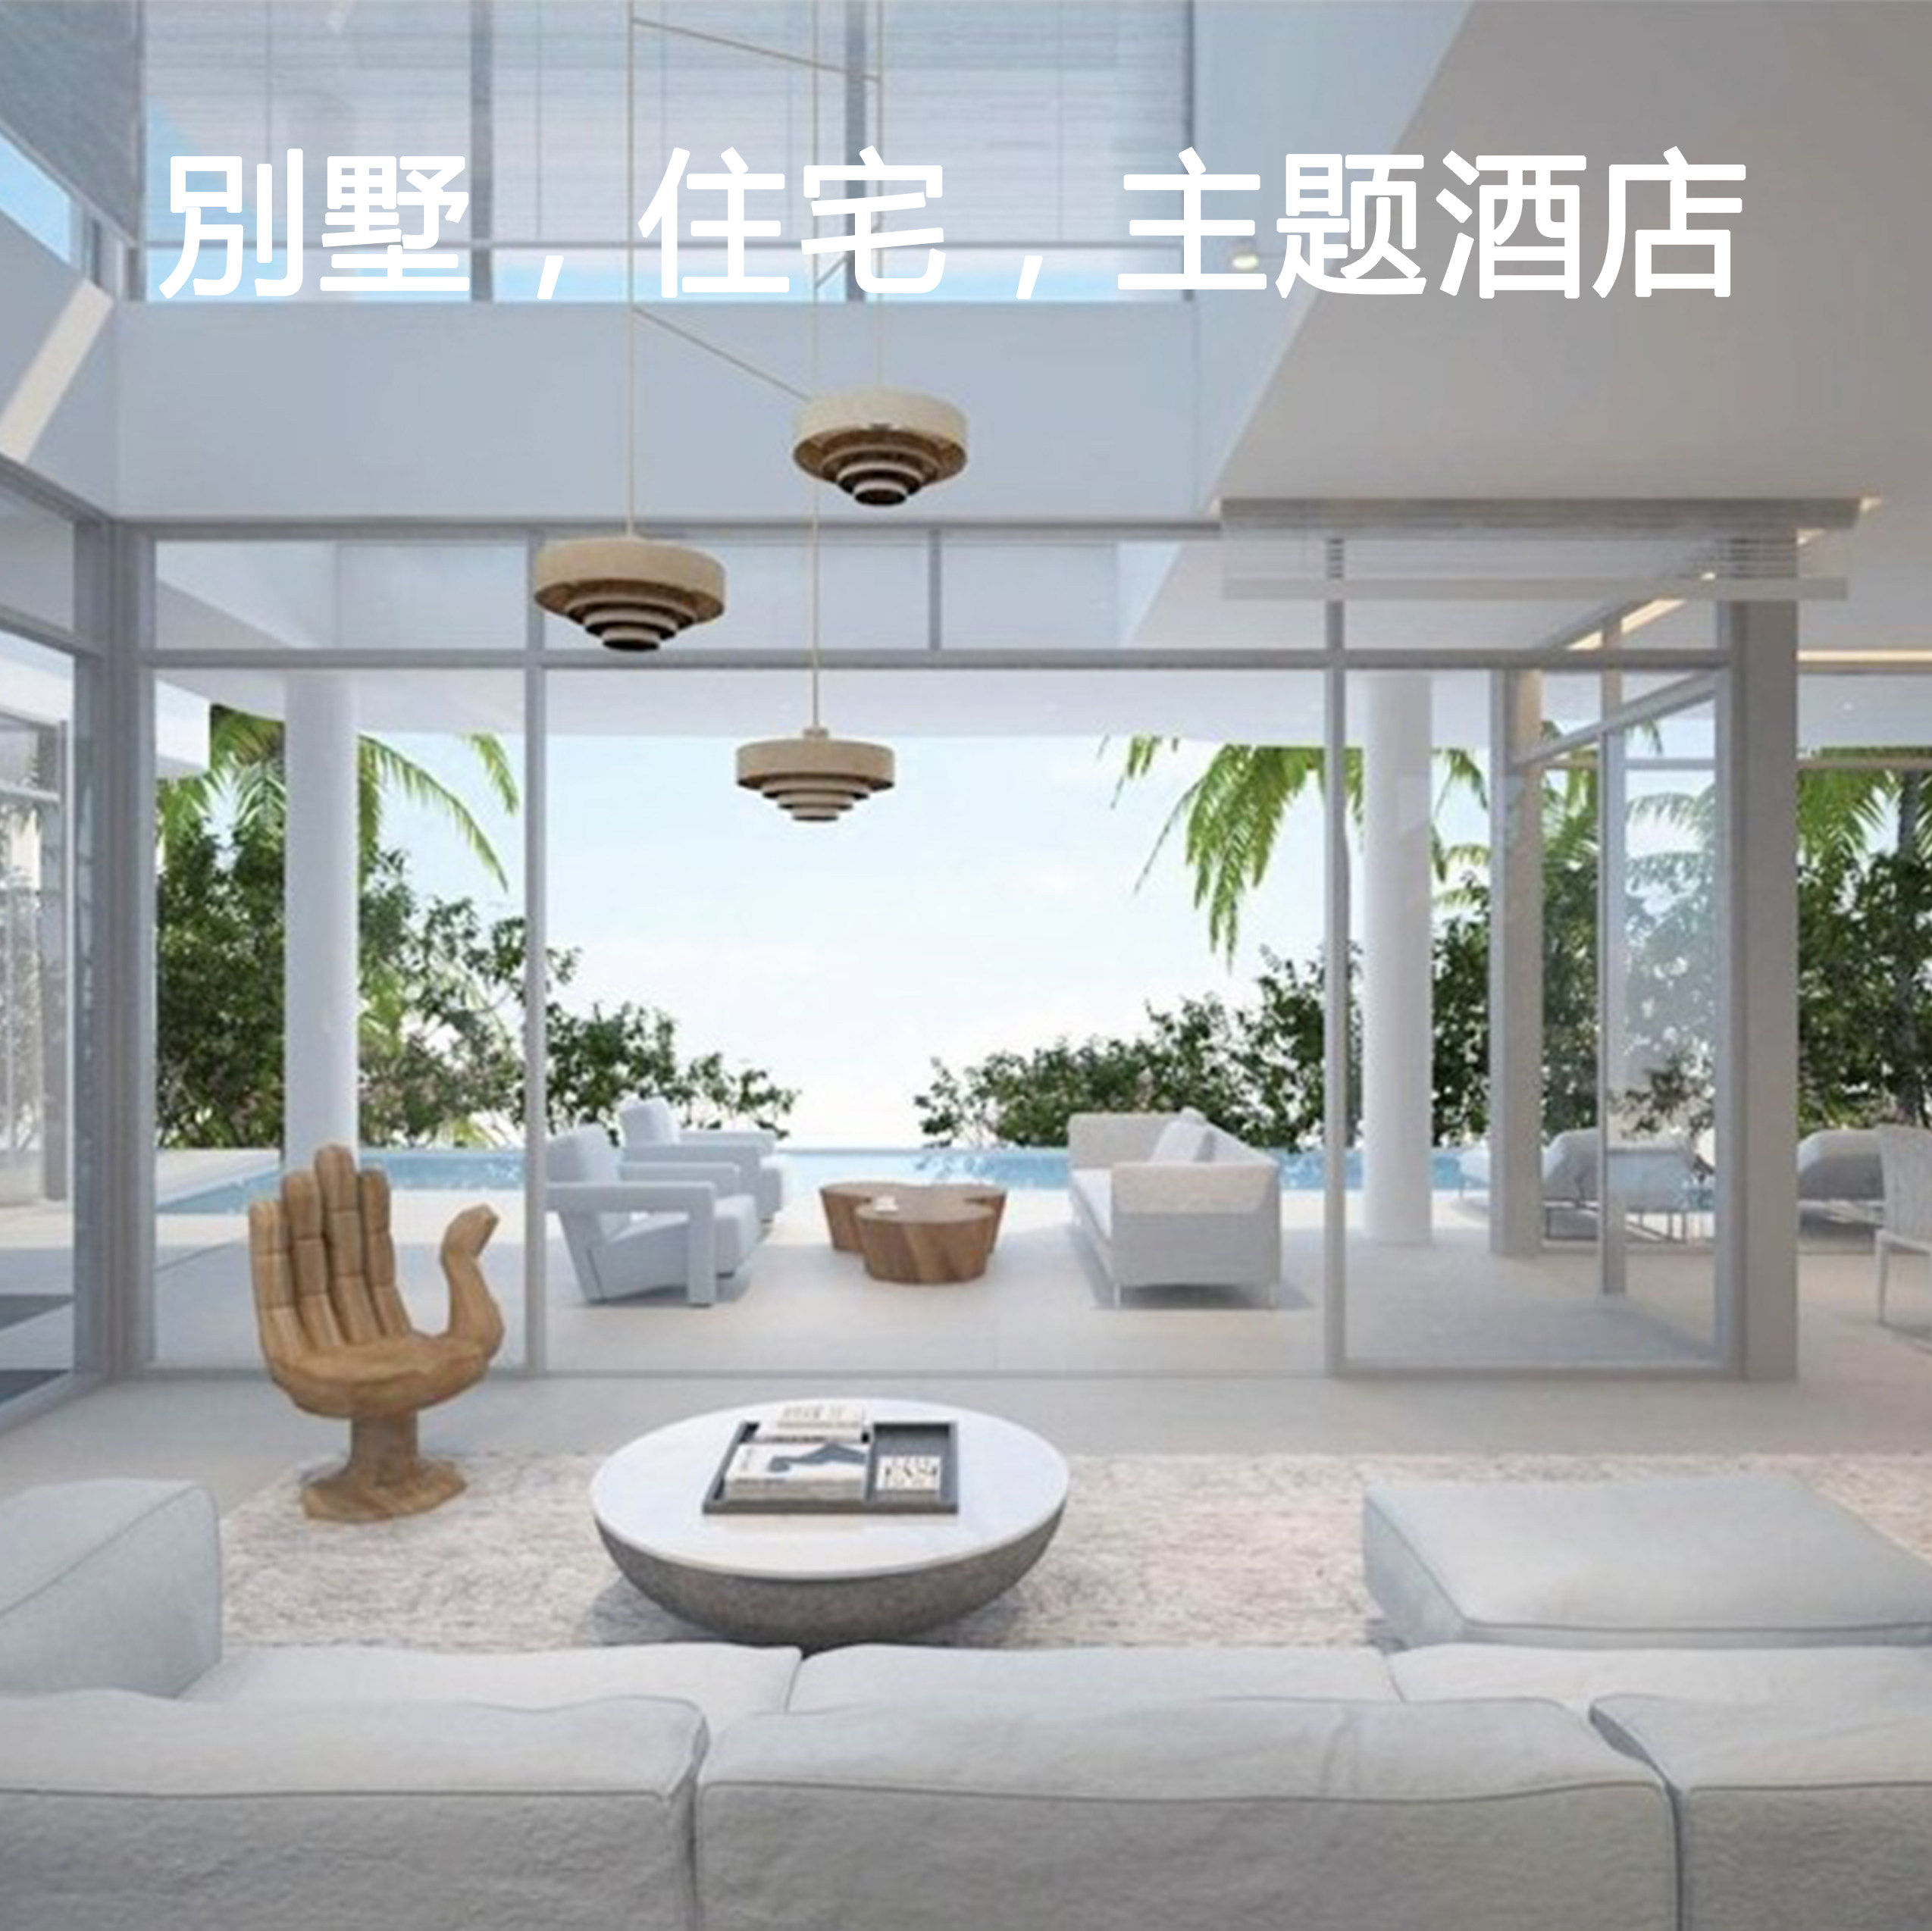 Villas, Condominiums,	Bountique Hotel, Leisure Facilities, Art Gallery Lingshui, Hainan, China